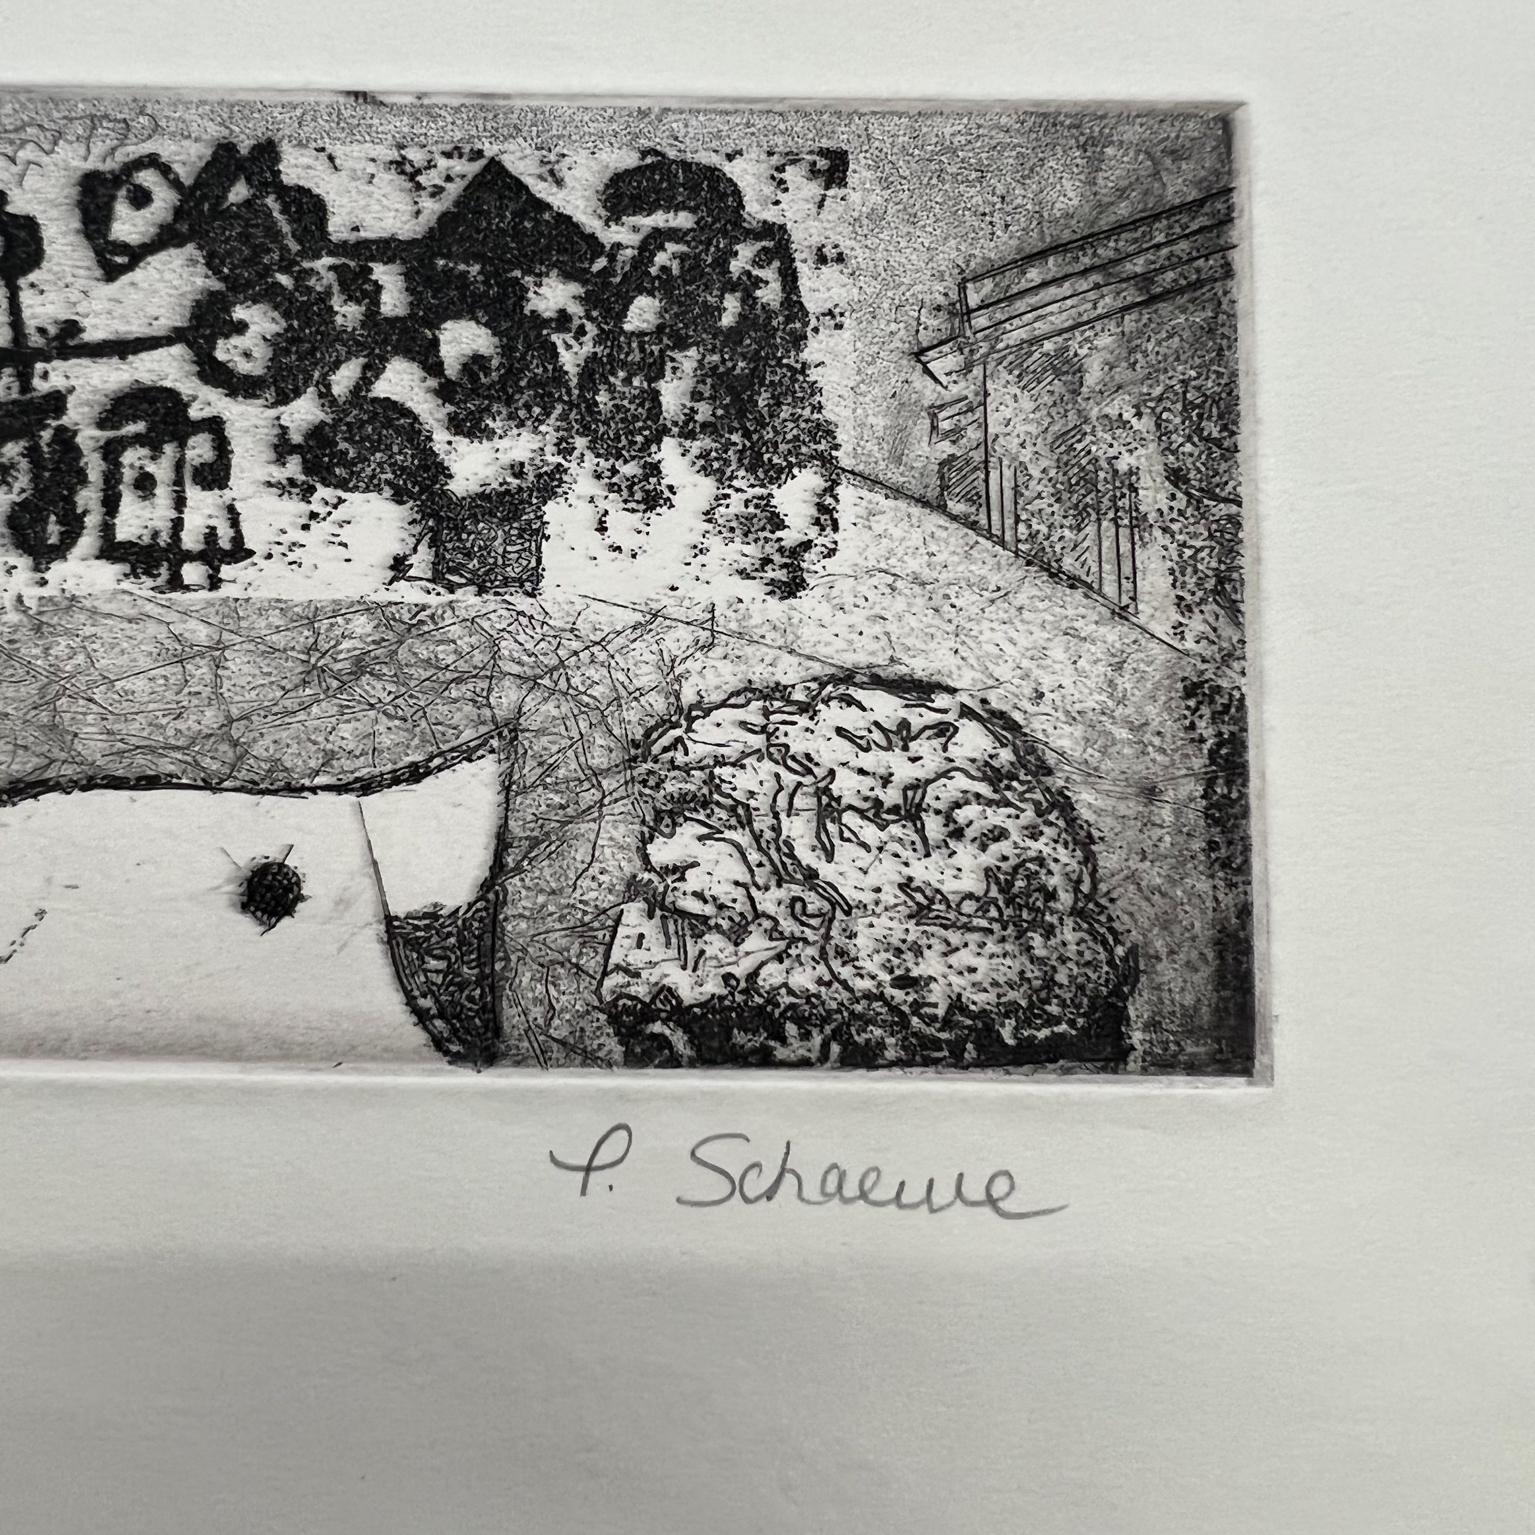 Modern Aesthetic Battle 7/16 Signed P. Schaewe Print Artwork on Paper For Sale